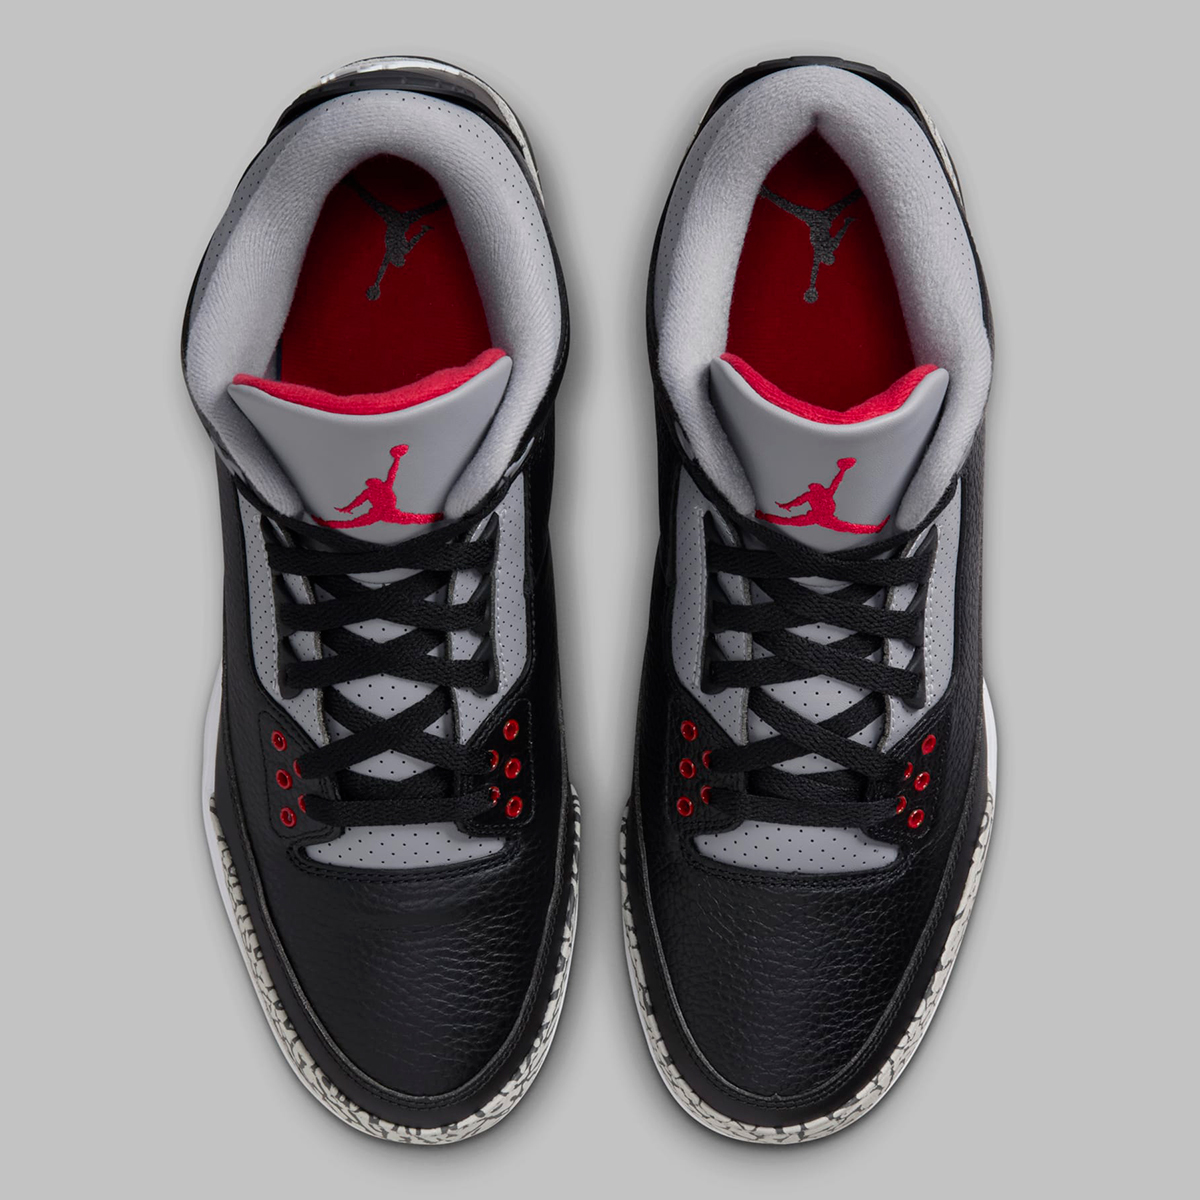 Air Jordan 3 Black Cement Cleats Fz8626 001 3